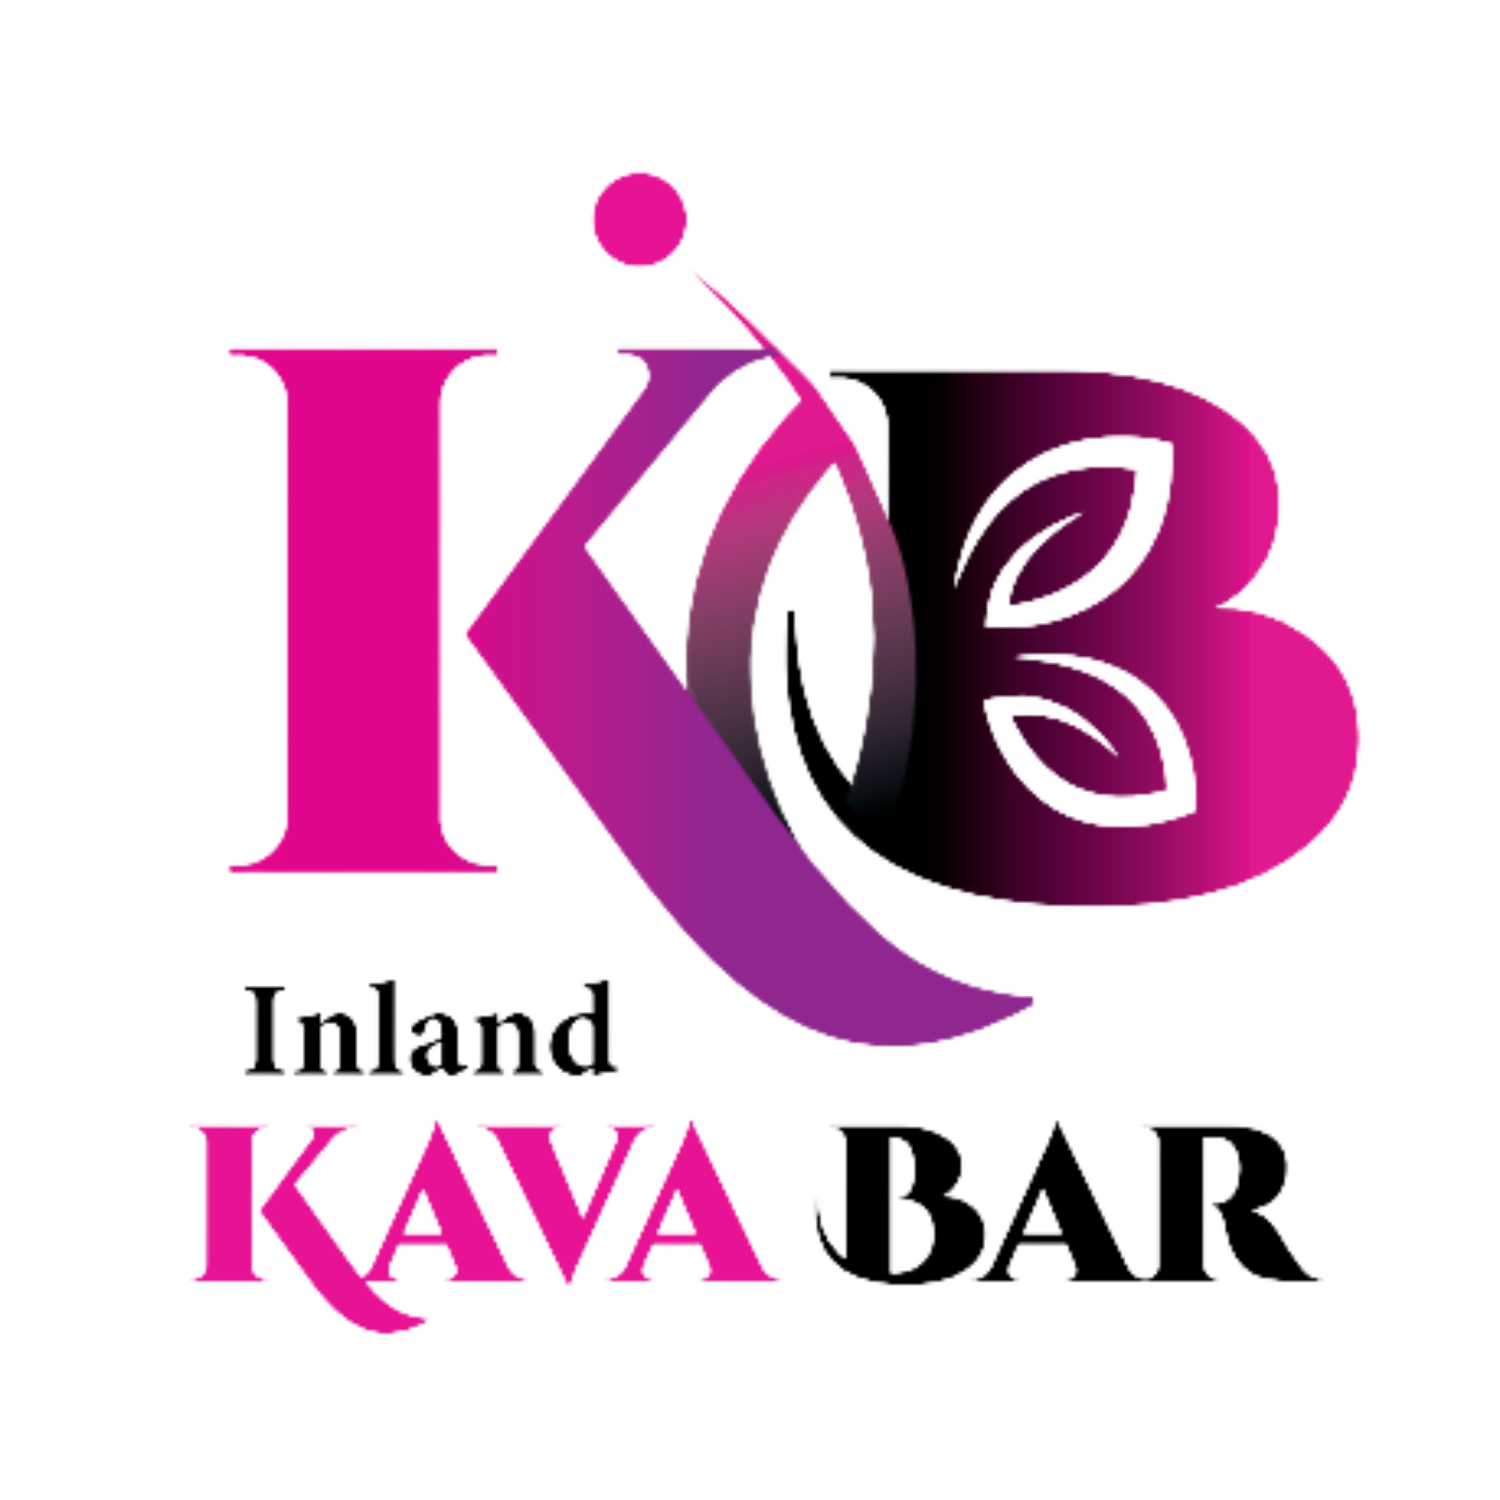 Inland Kava Bar